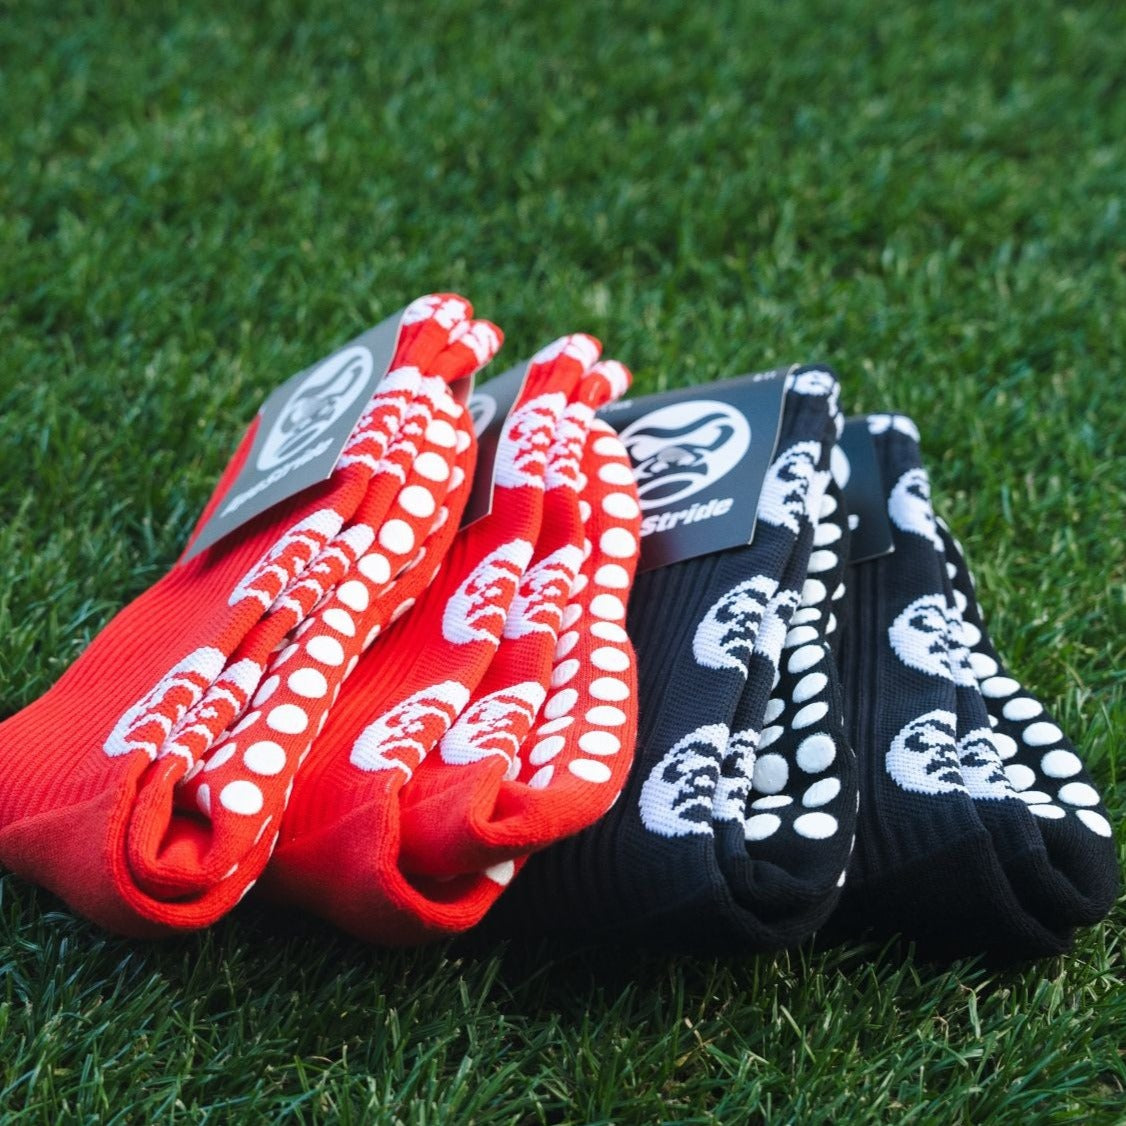 Red & Black 4 Pack Sports Grip Socks Bundle